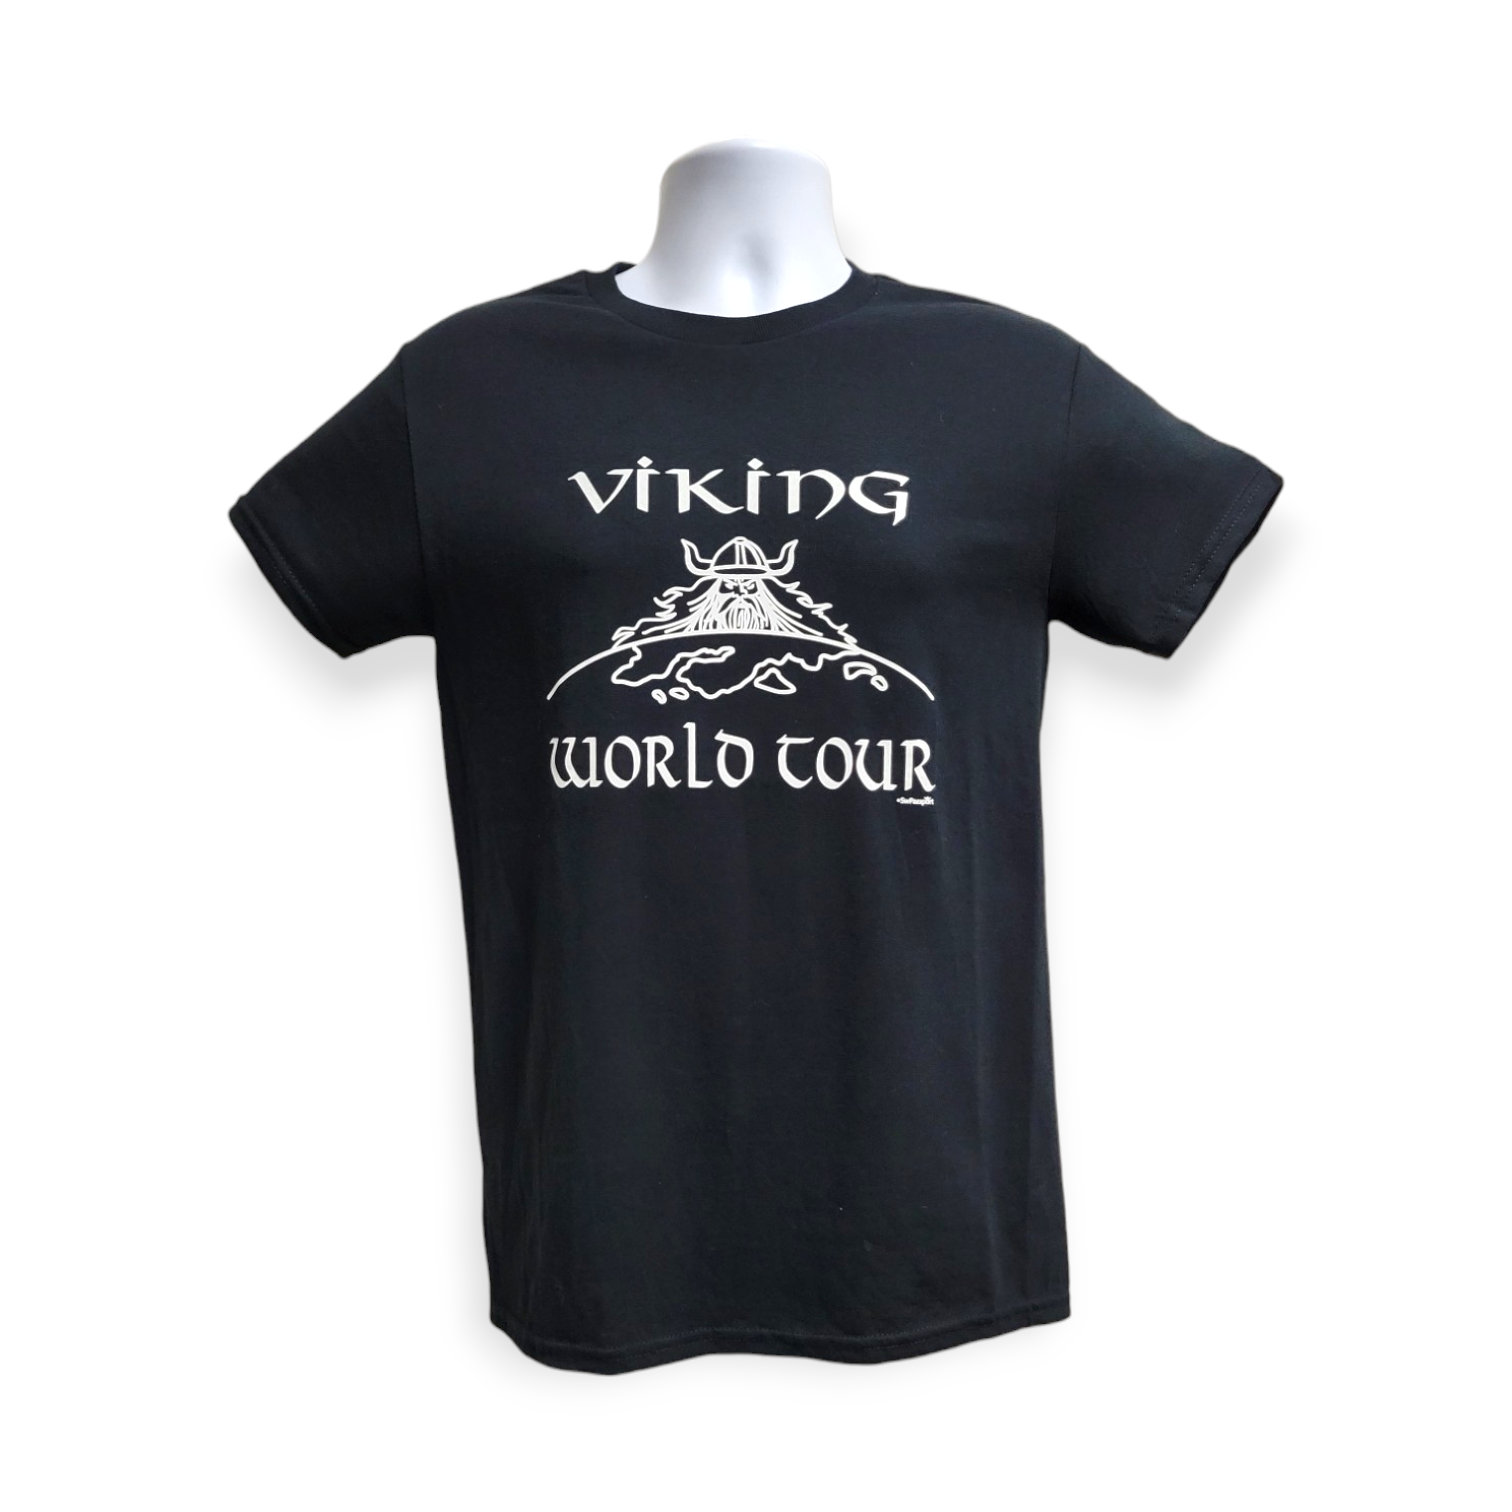 Tee: "Viking World Tour"